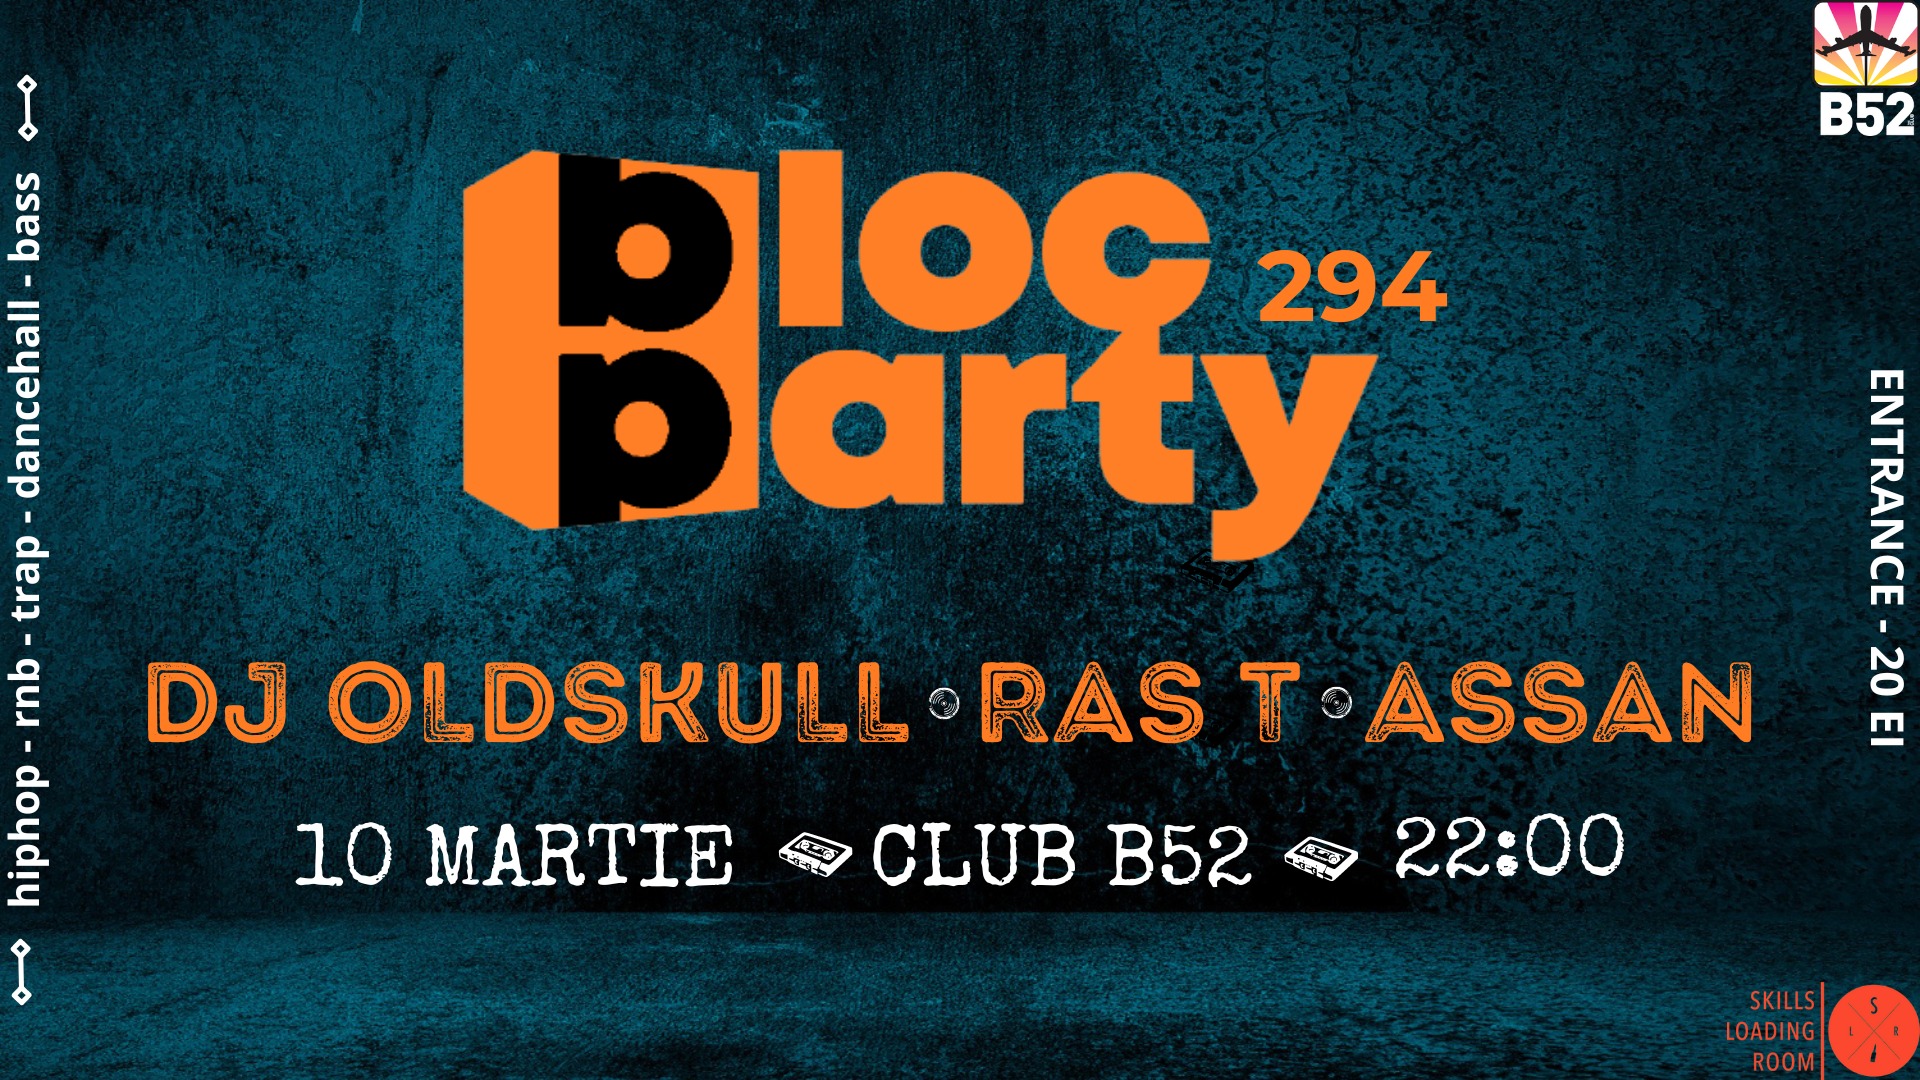 BLOC PARTY 294 // DJ OLDSKULL / RAS T / ASSAN